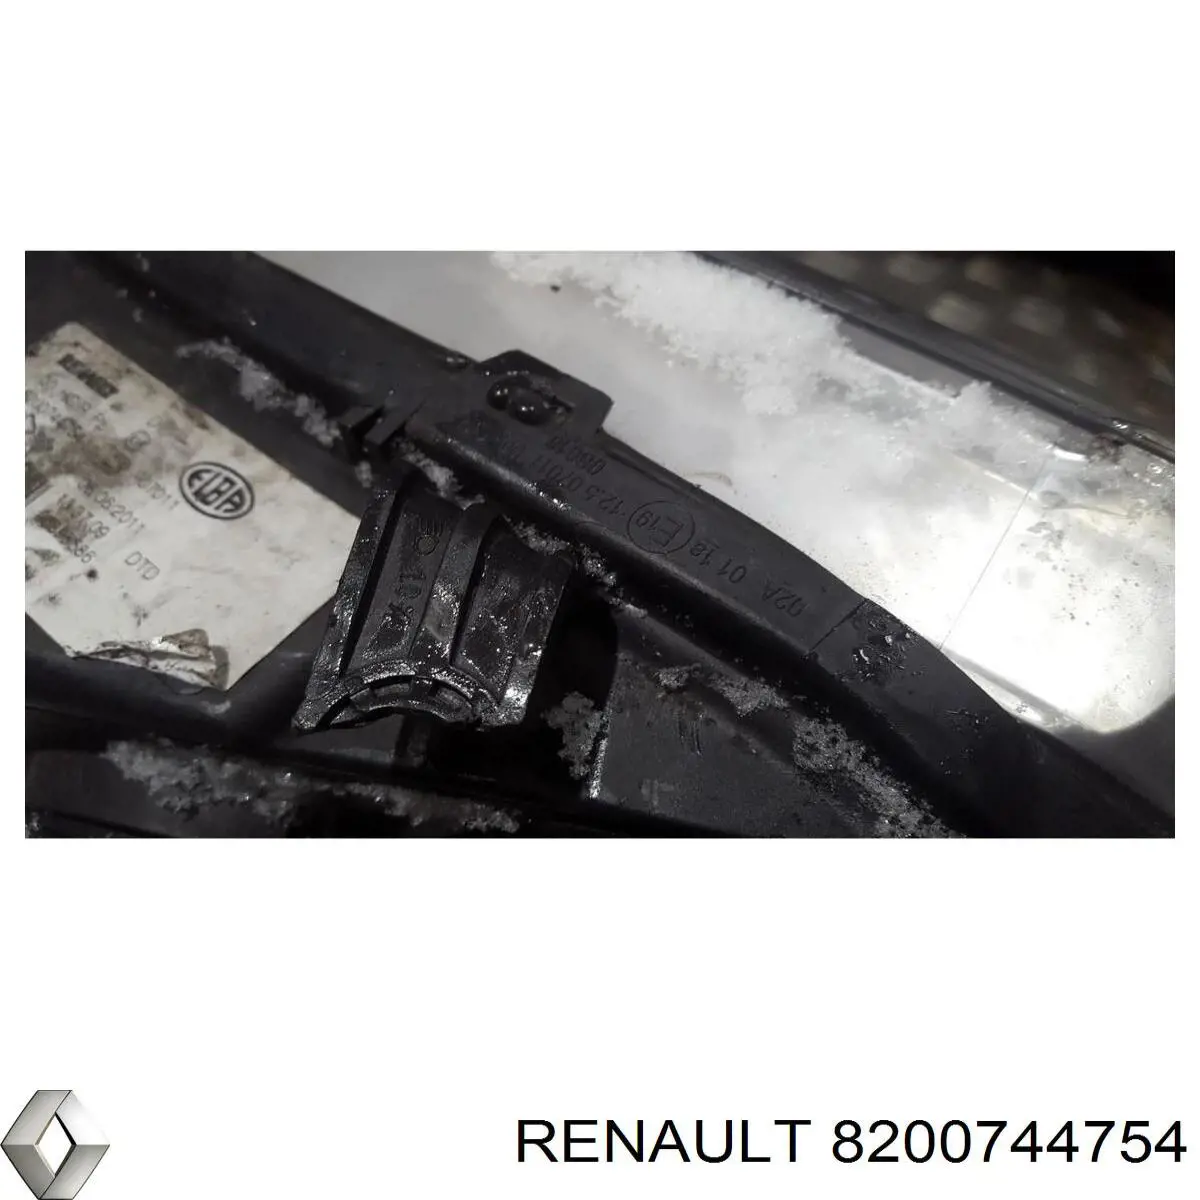 8200744754 Renault (RVI) faro derecho